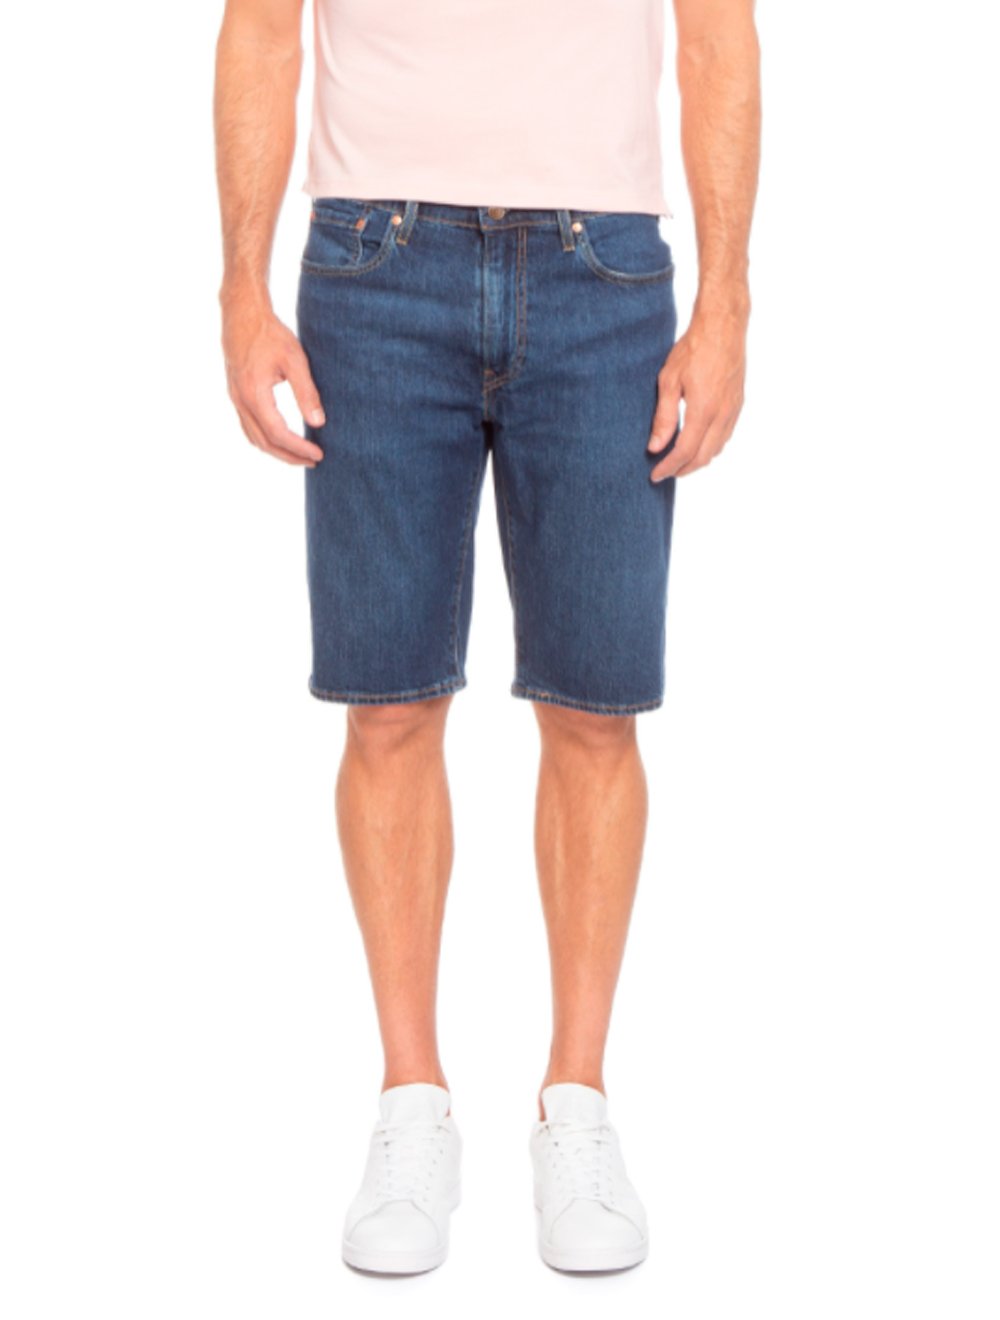 Bermuda Levis Jeans Masculina 405 Standard Shorts Escura